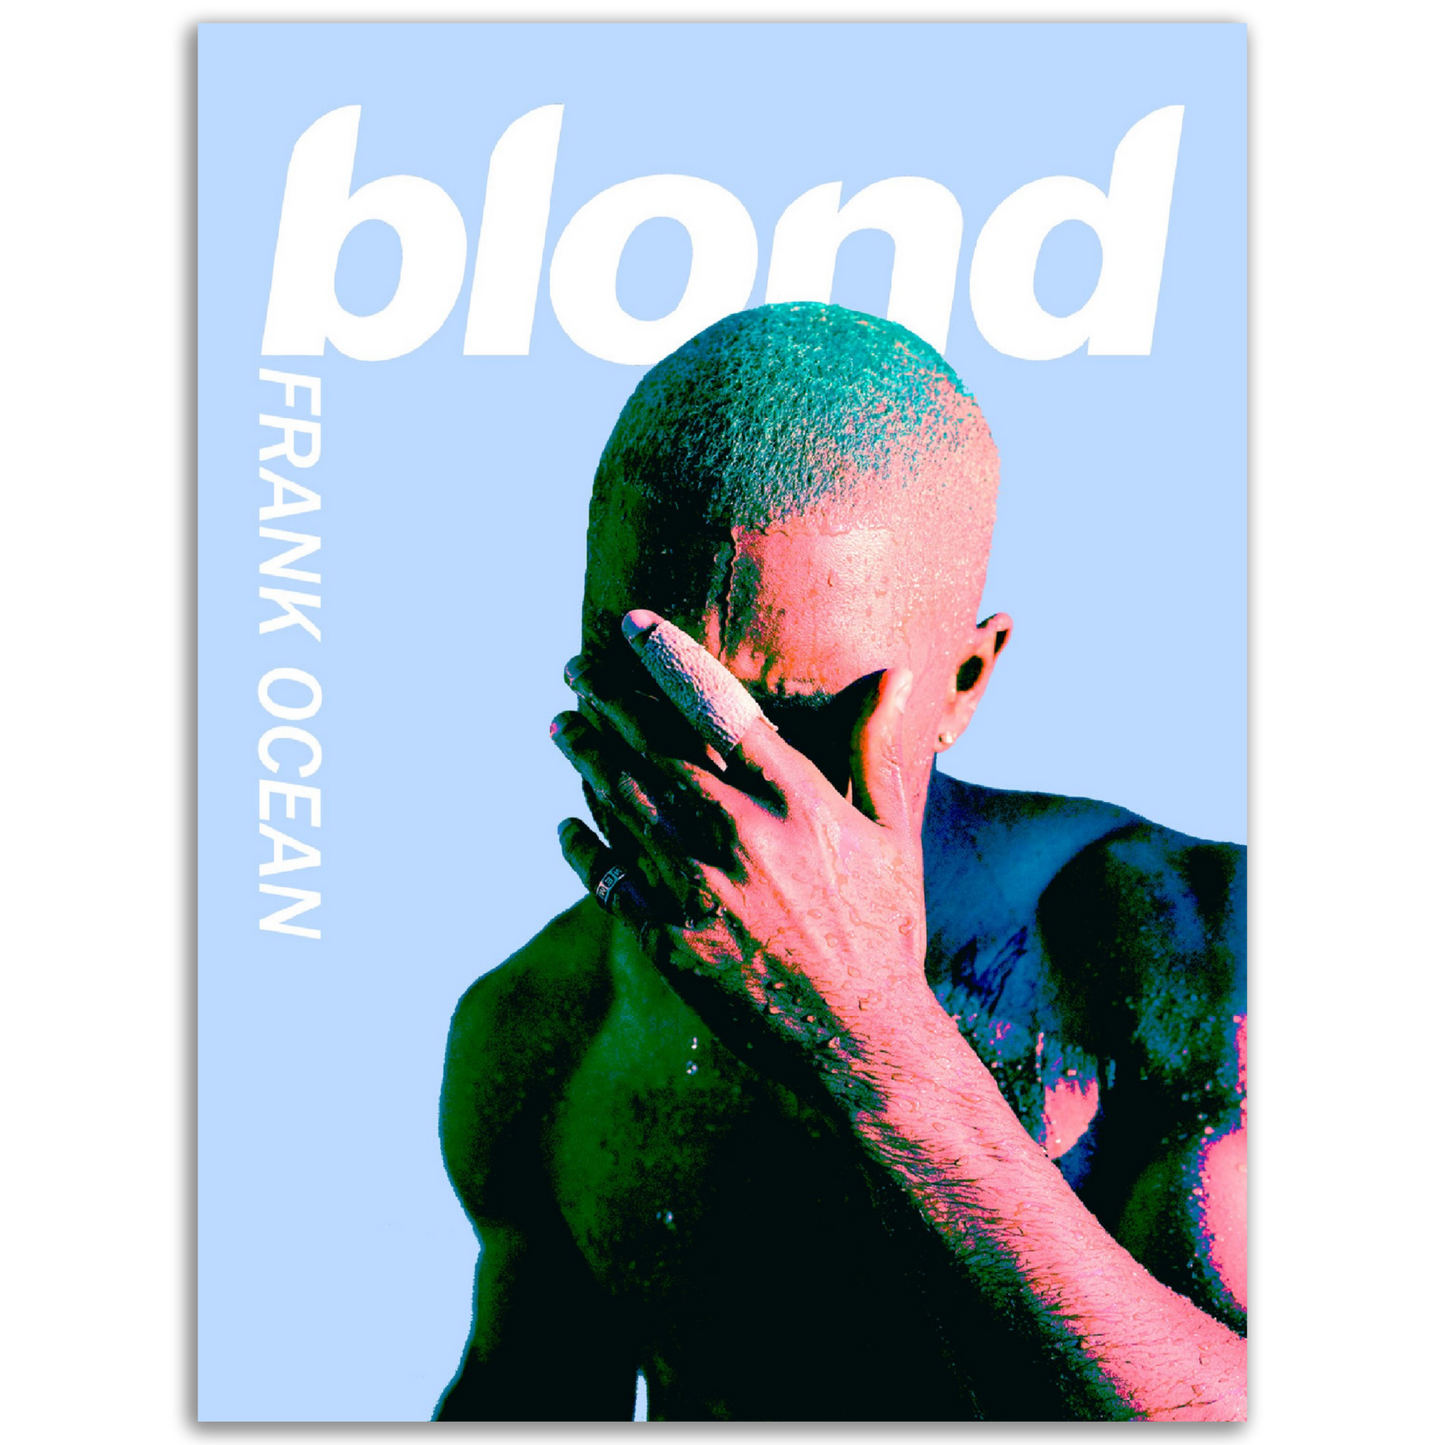 Frank Ocean - blond